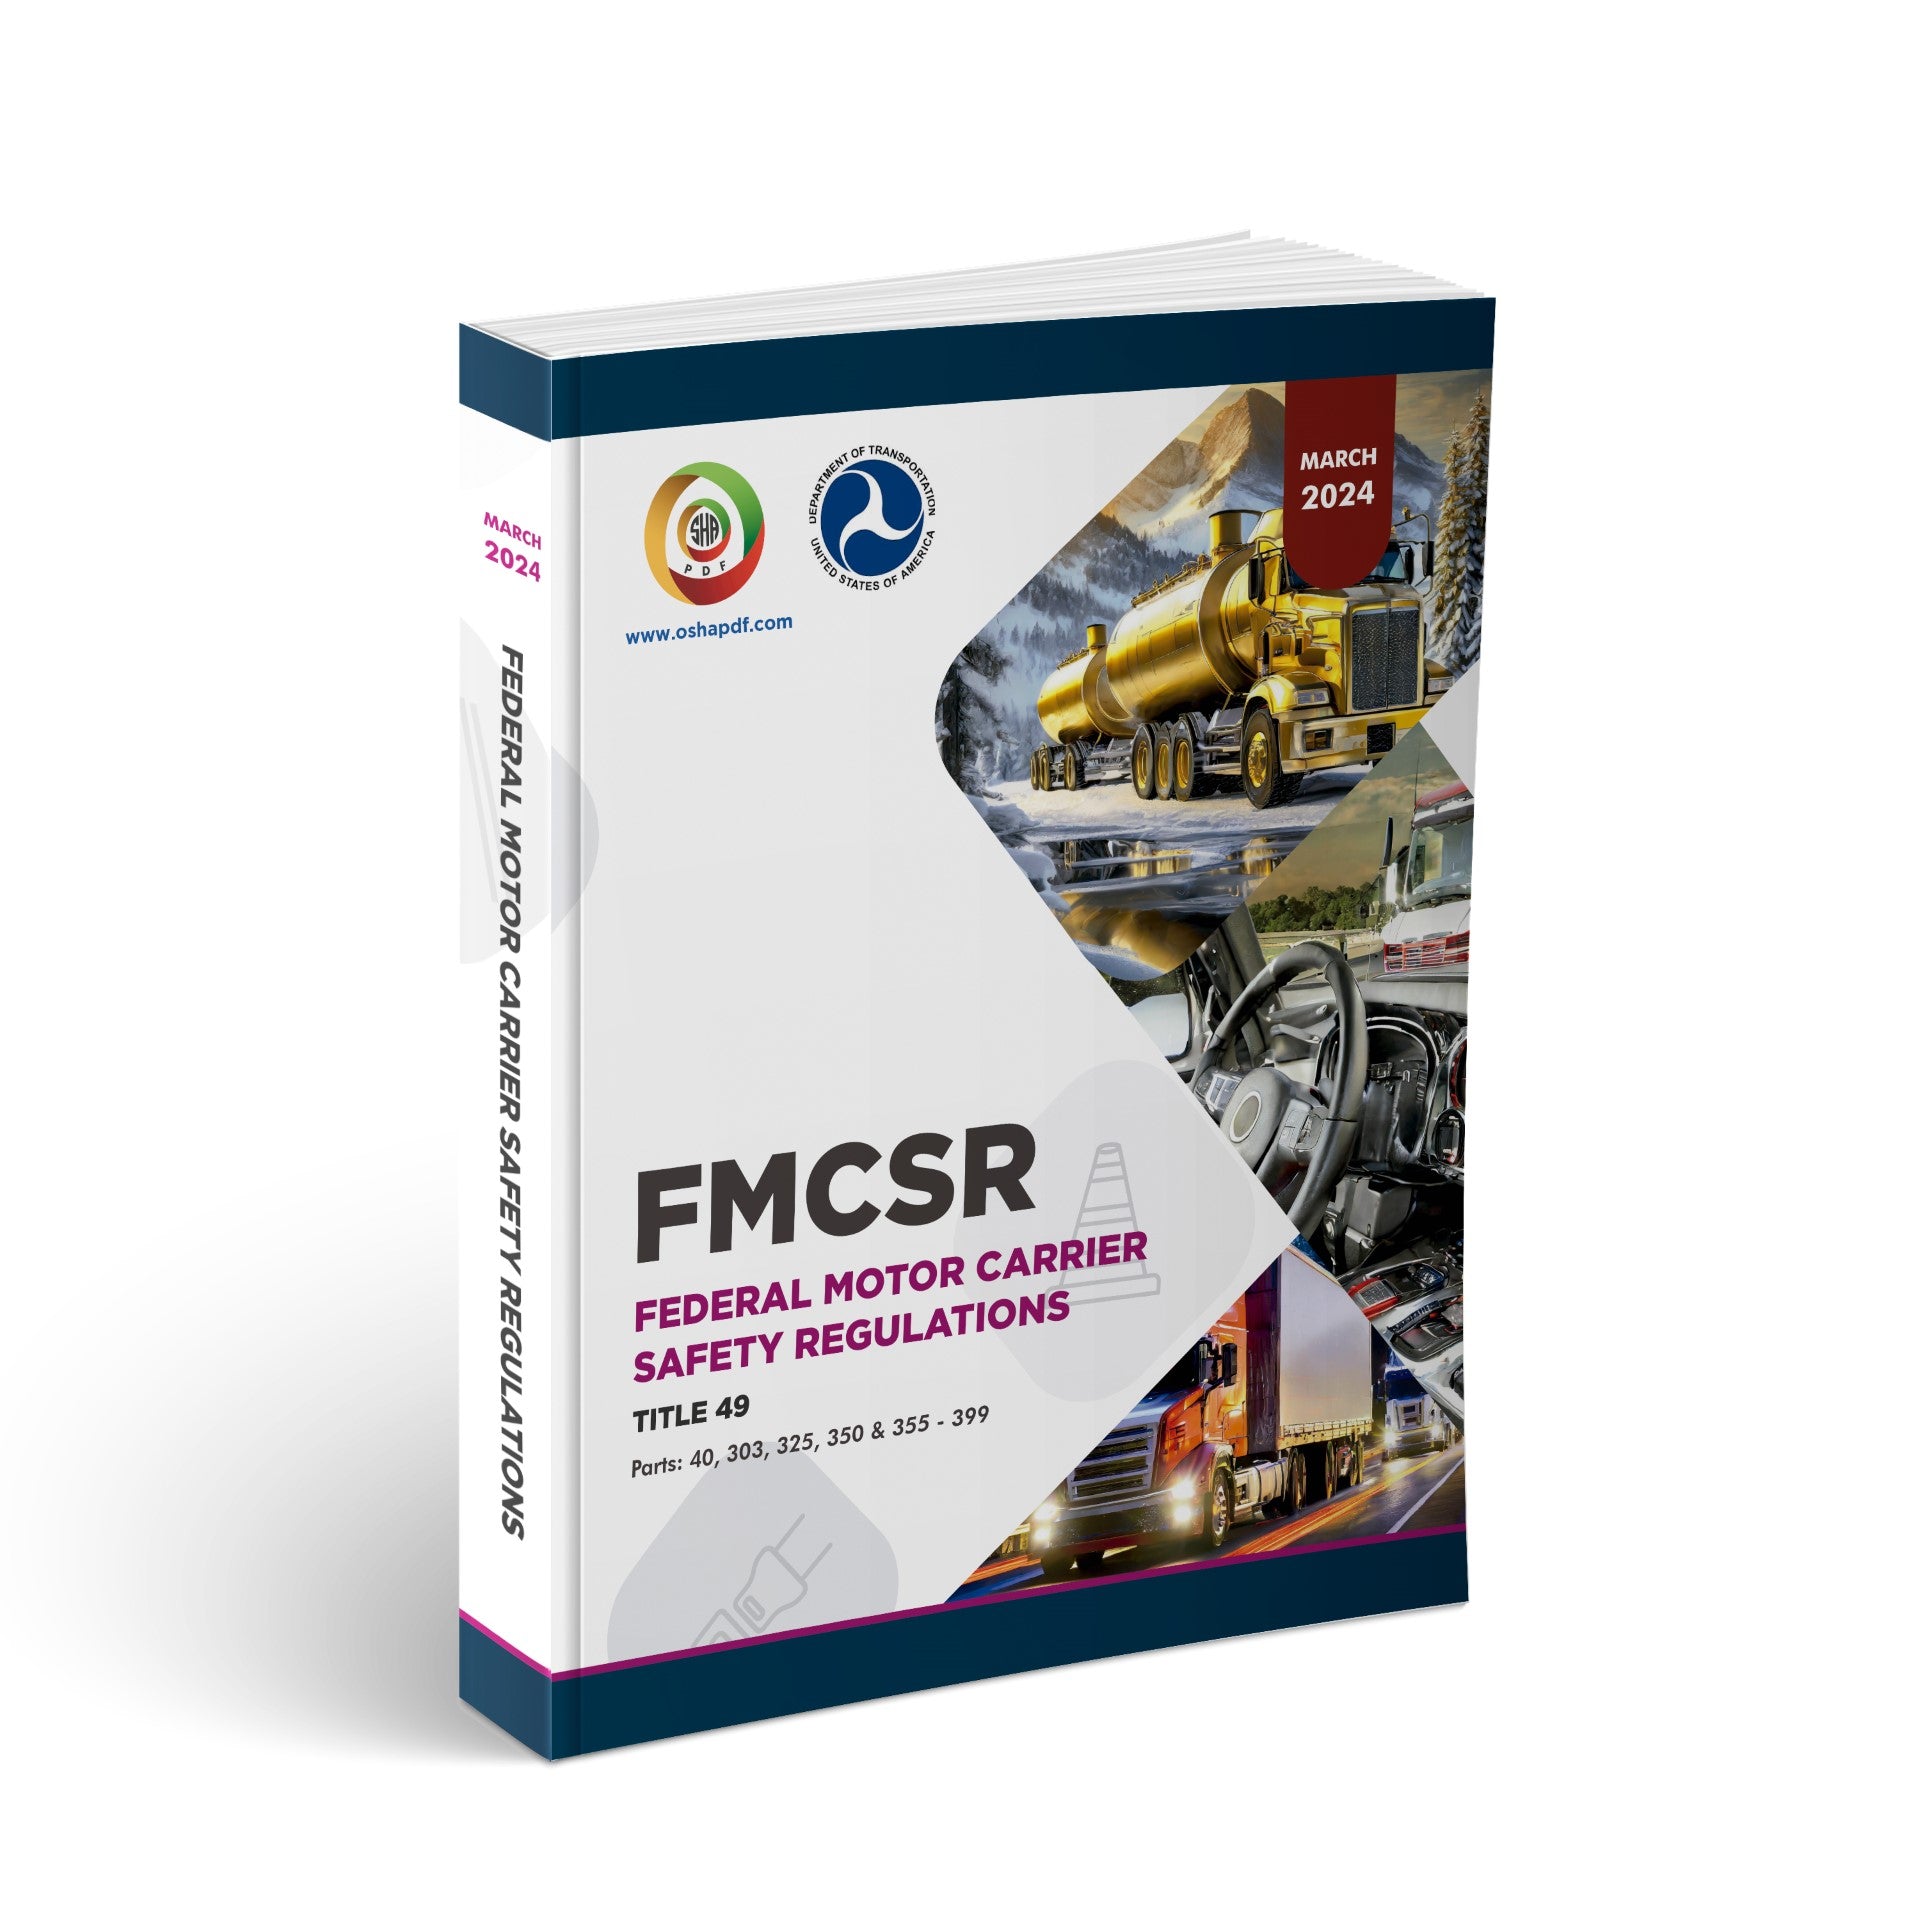 Federal Motor Carrier Safety Regulations (FMCSR) March 2024